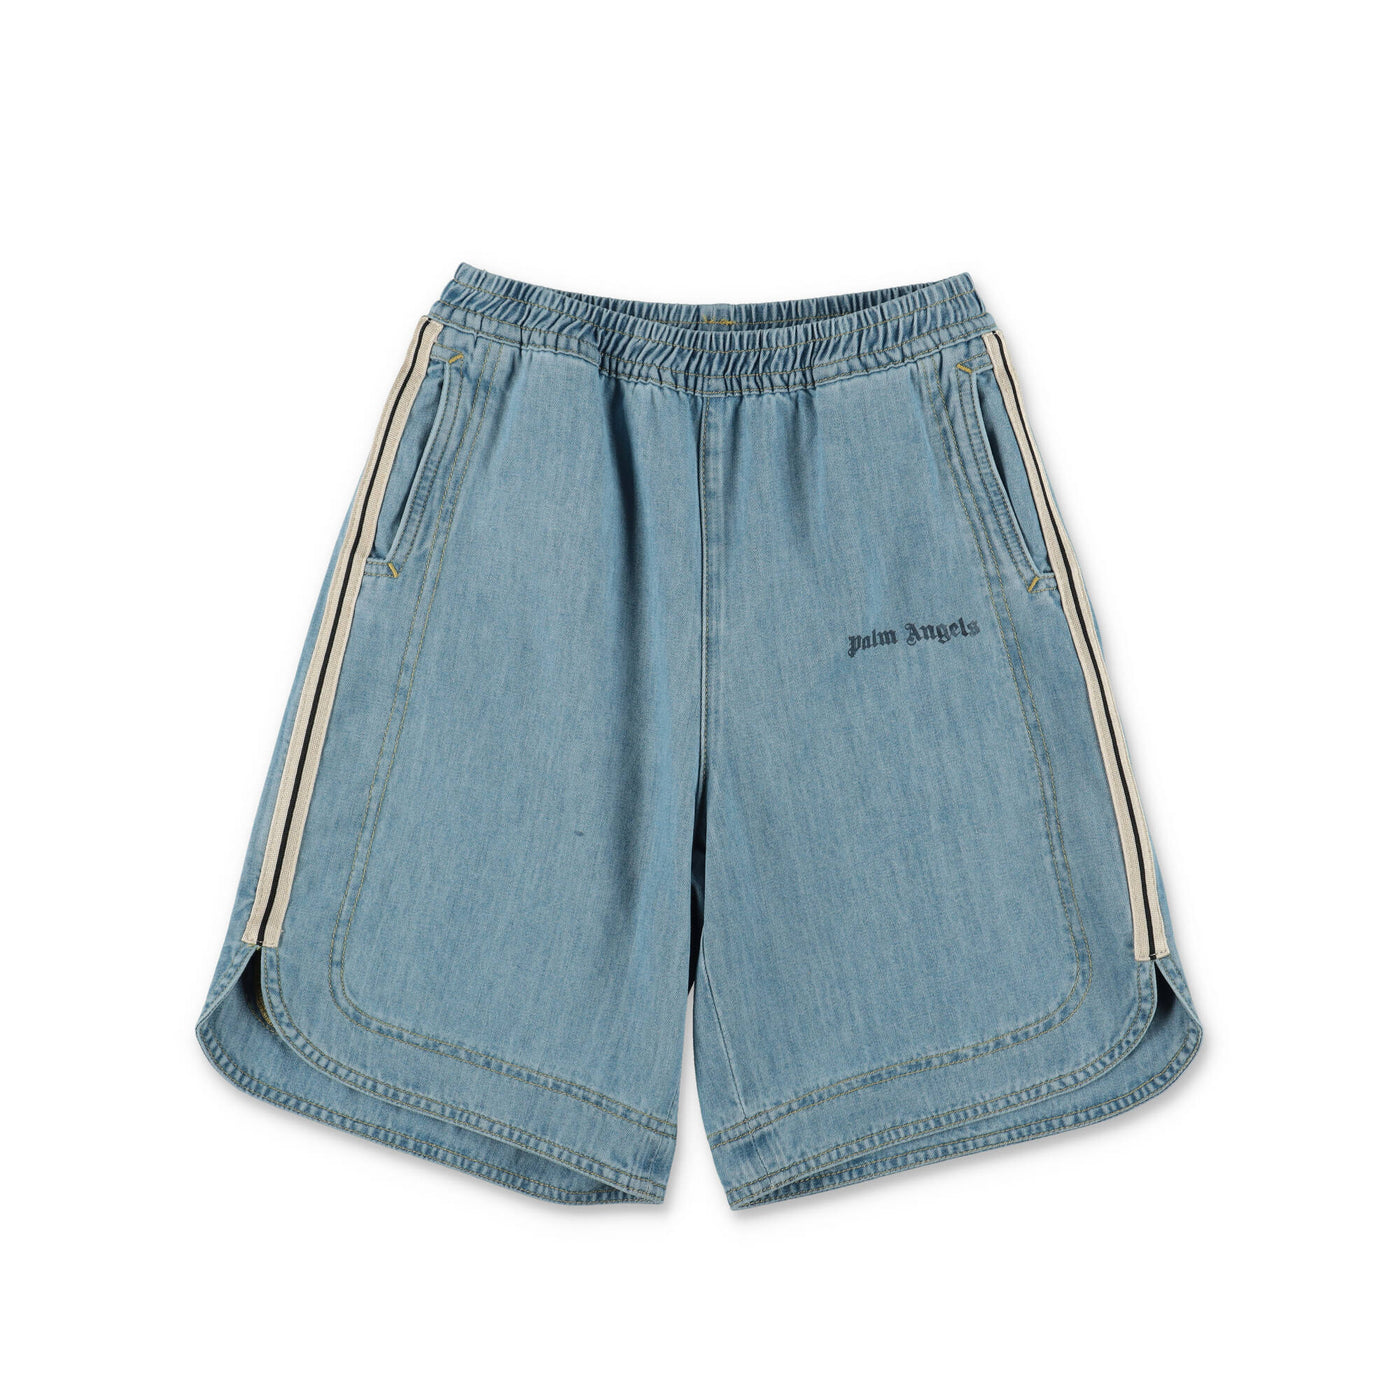 Light blue cotton denim boy PALM ANGELS shorts